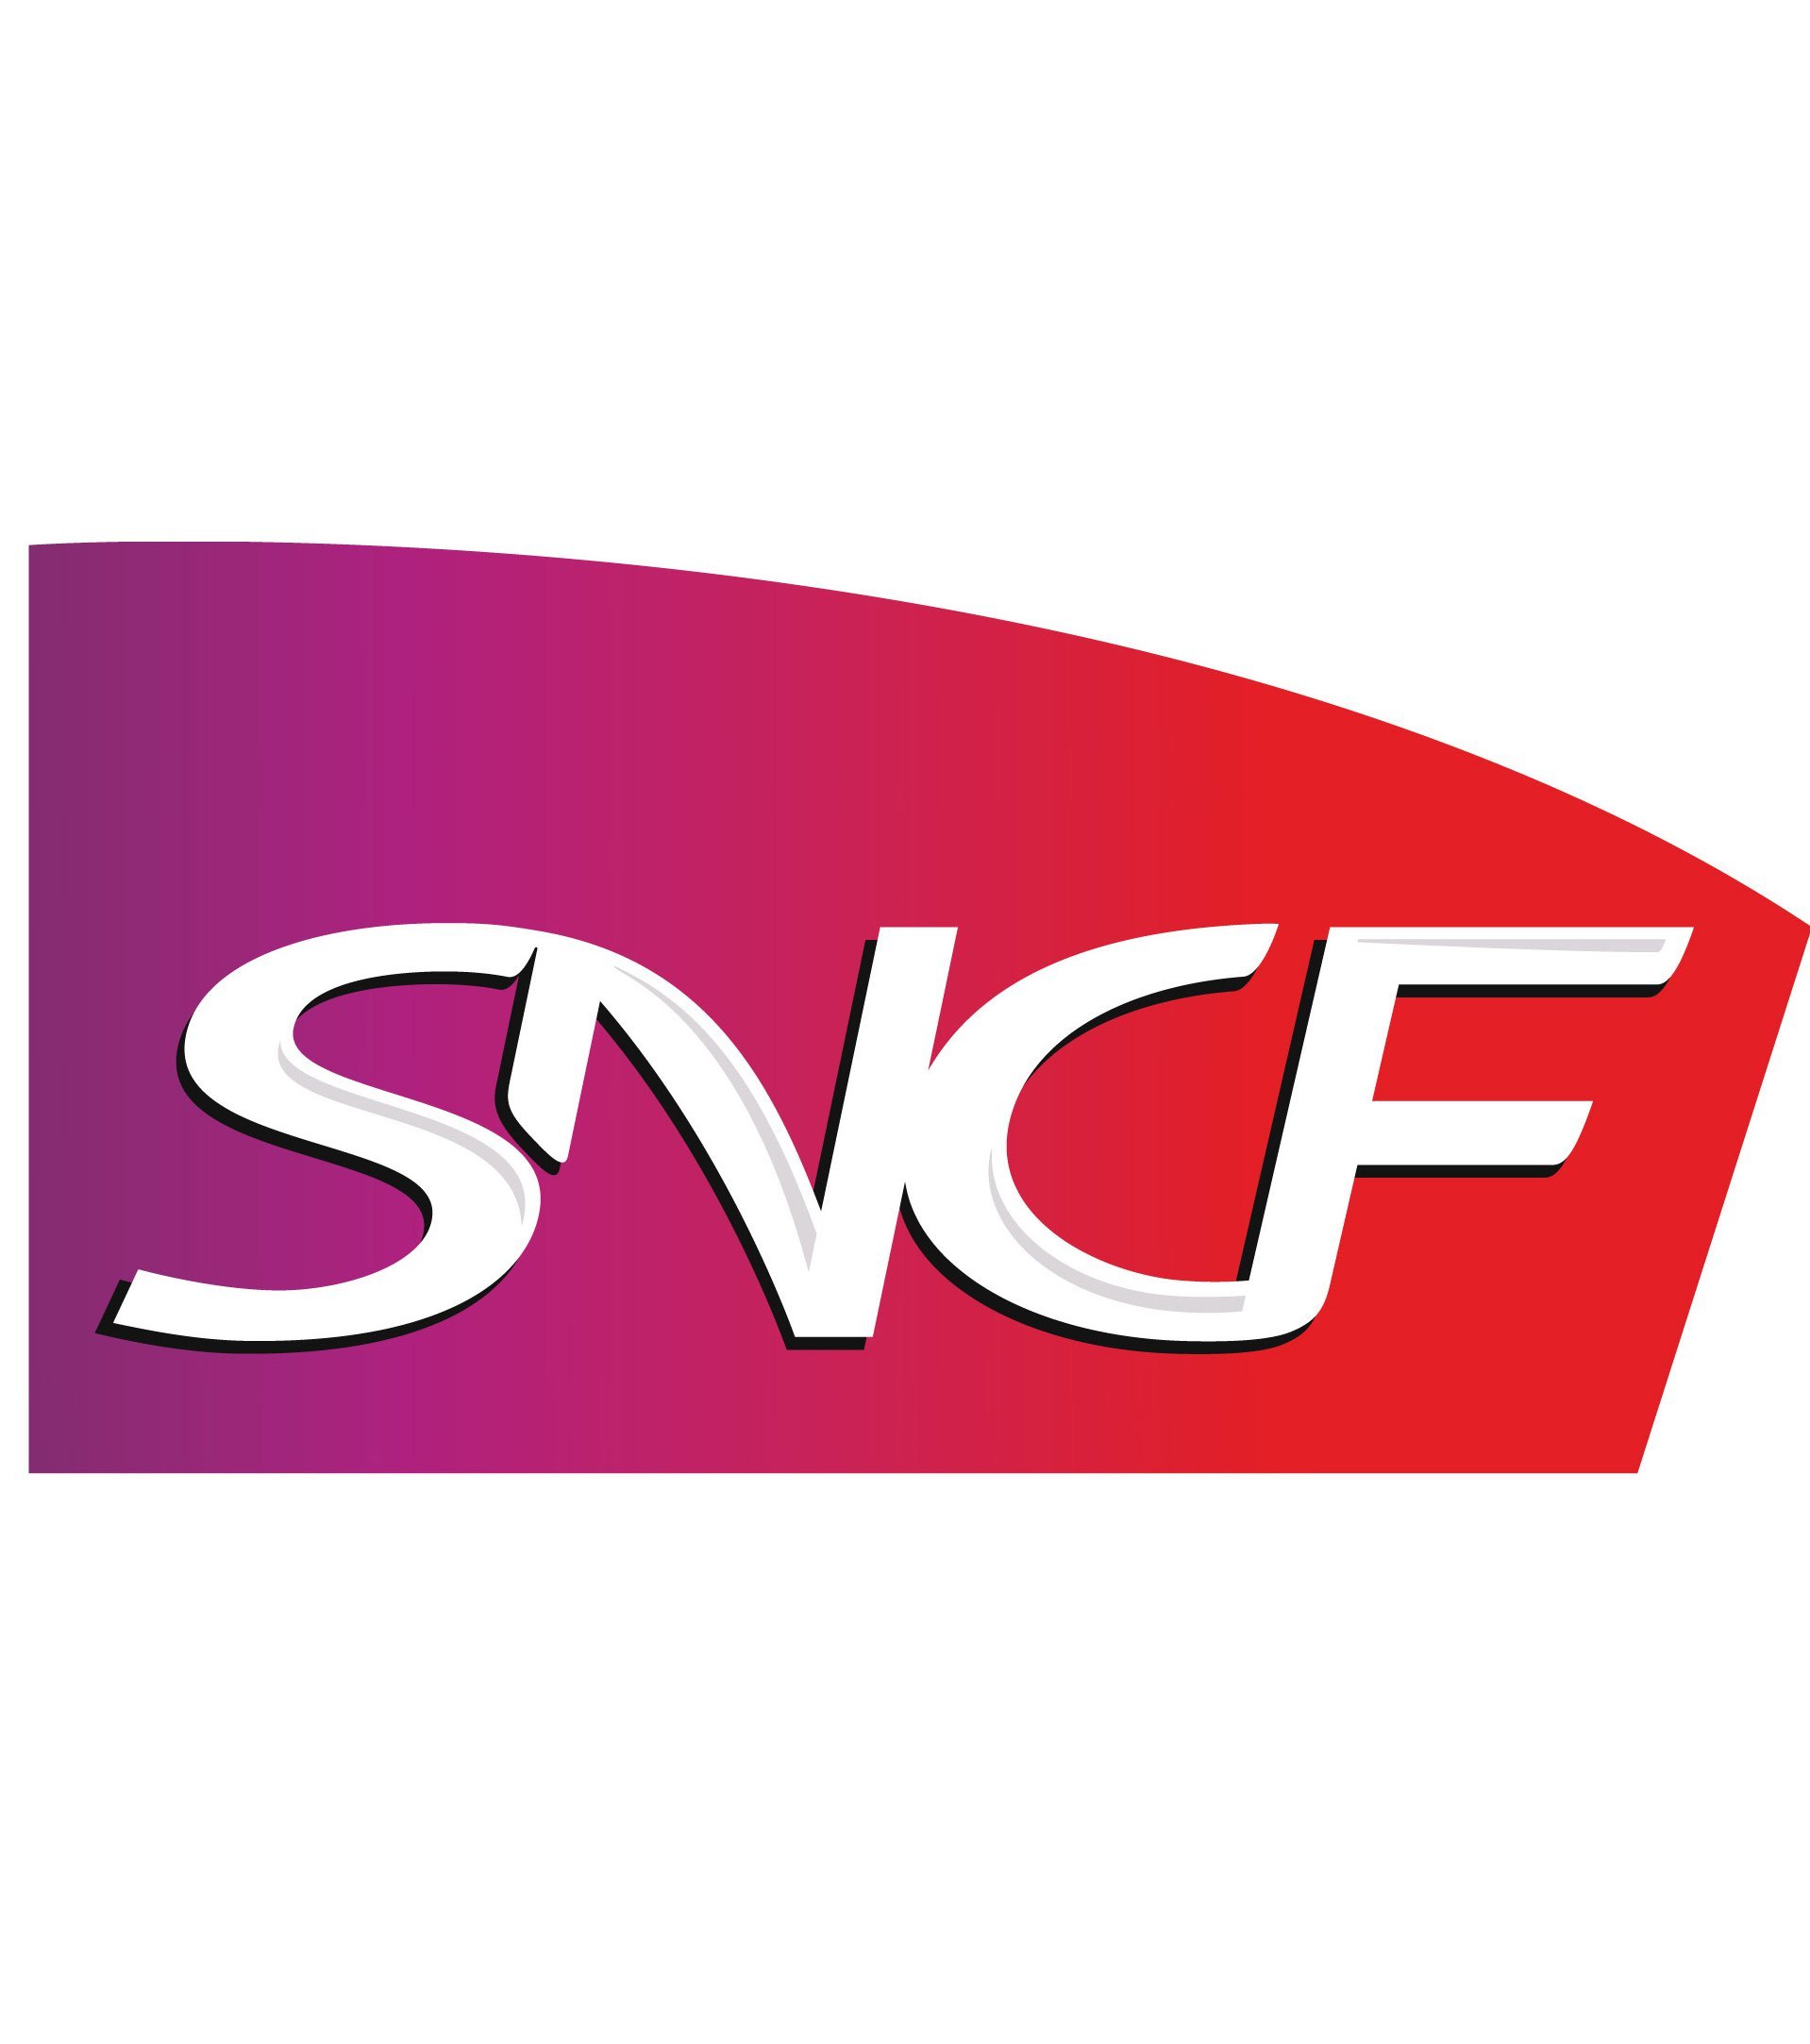 logo-sncf_114139_wide.jpg